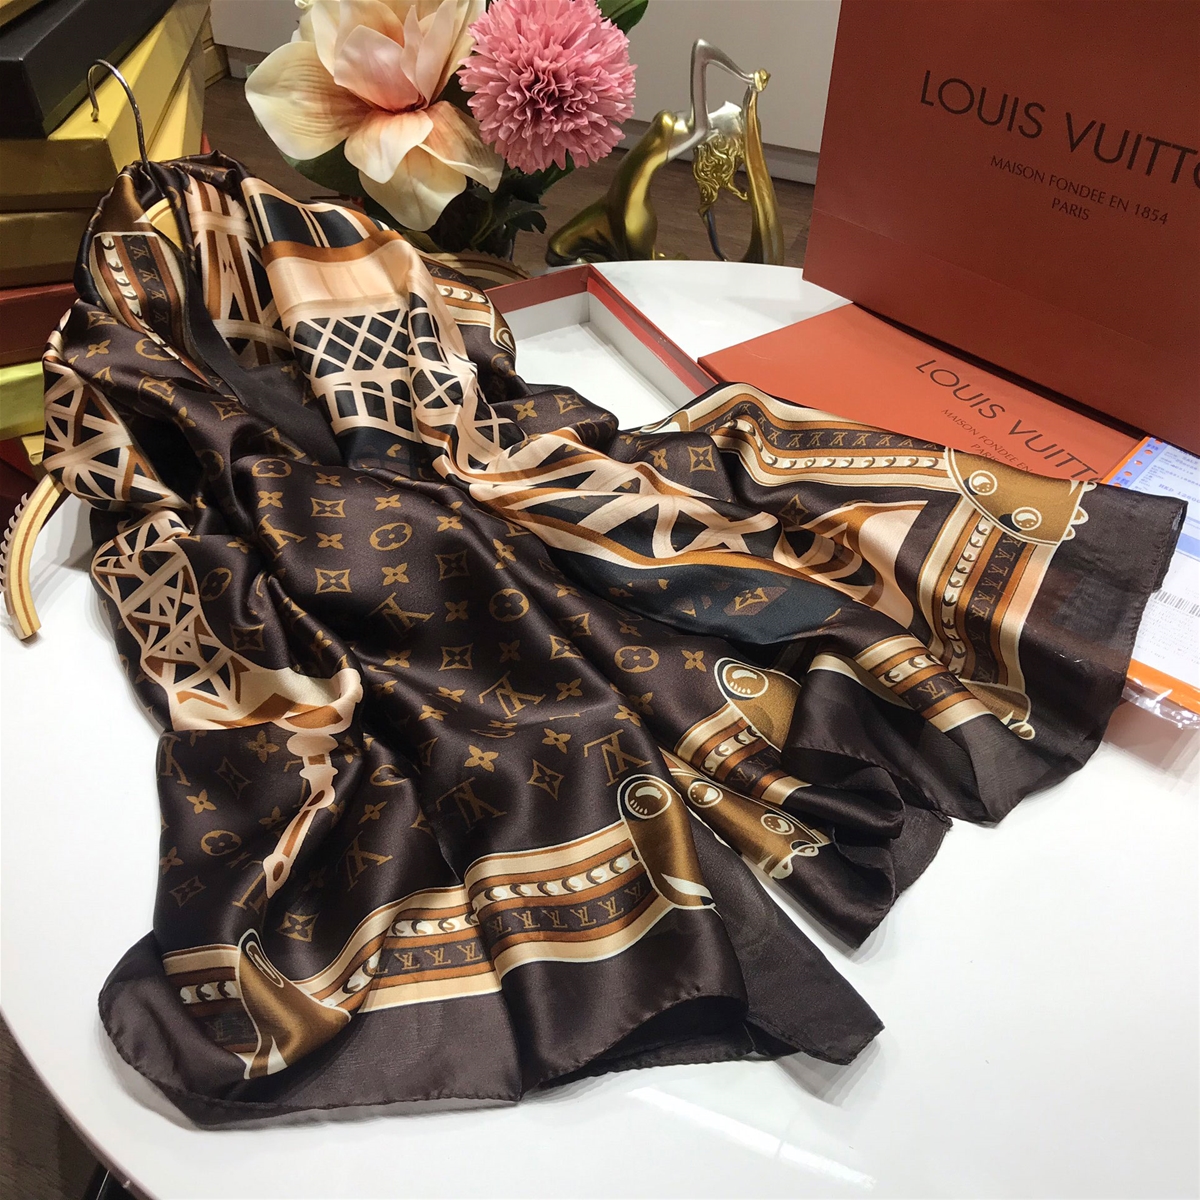 Khăn hiệu Louis Vuitton hoa nâu cao cấp